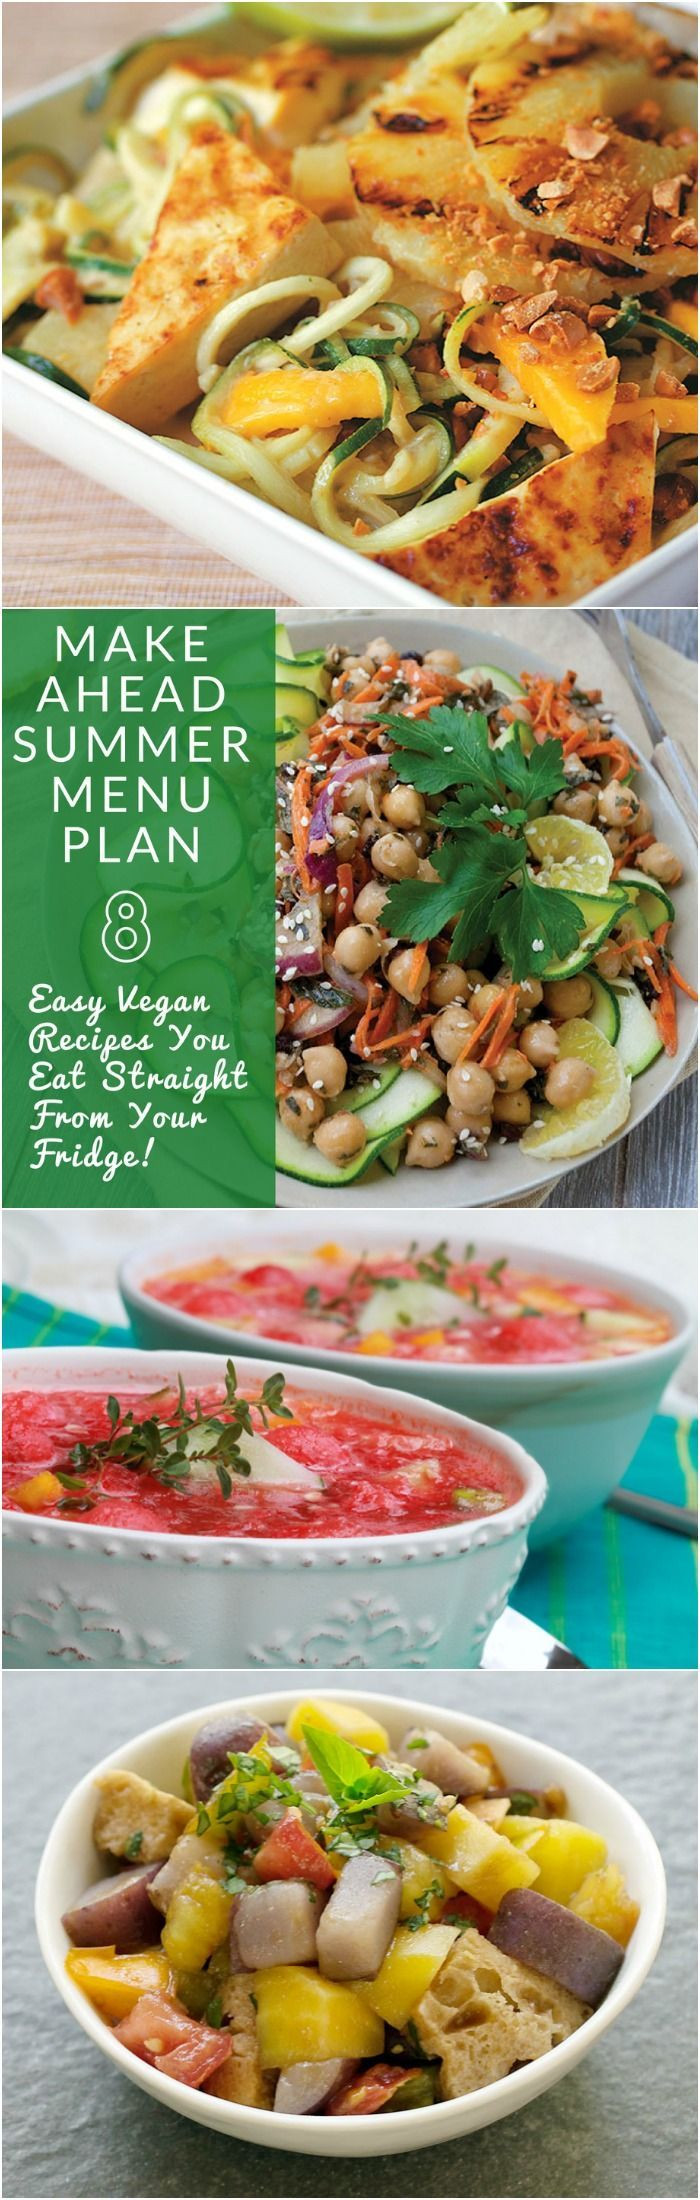 Vegan Plan Ahead Meals
 Vegan Summer Make Ahead Menu Plan 8 Easy Recipes that